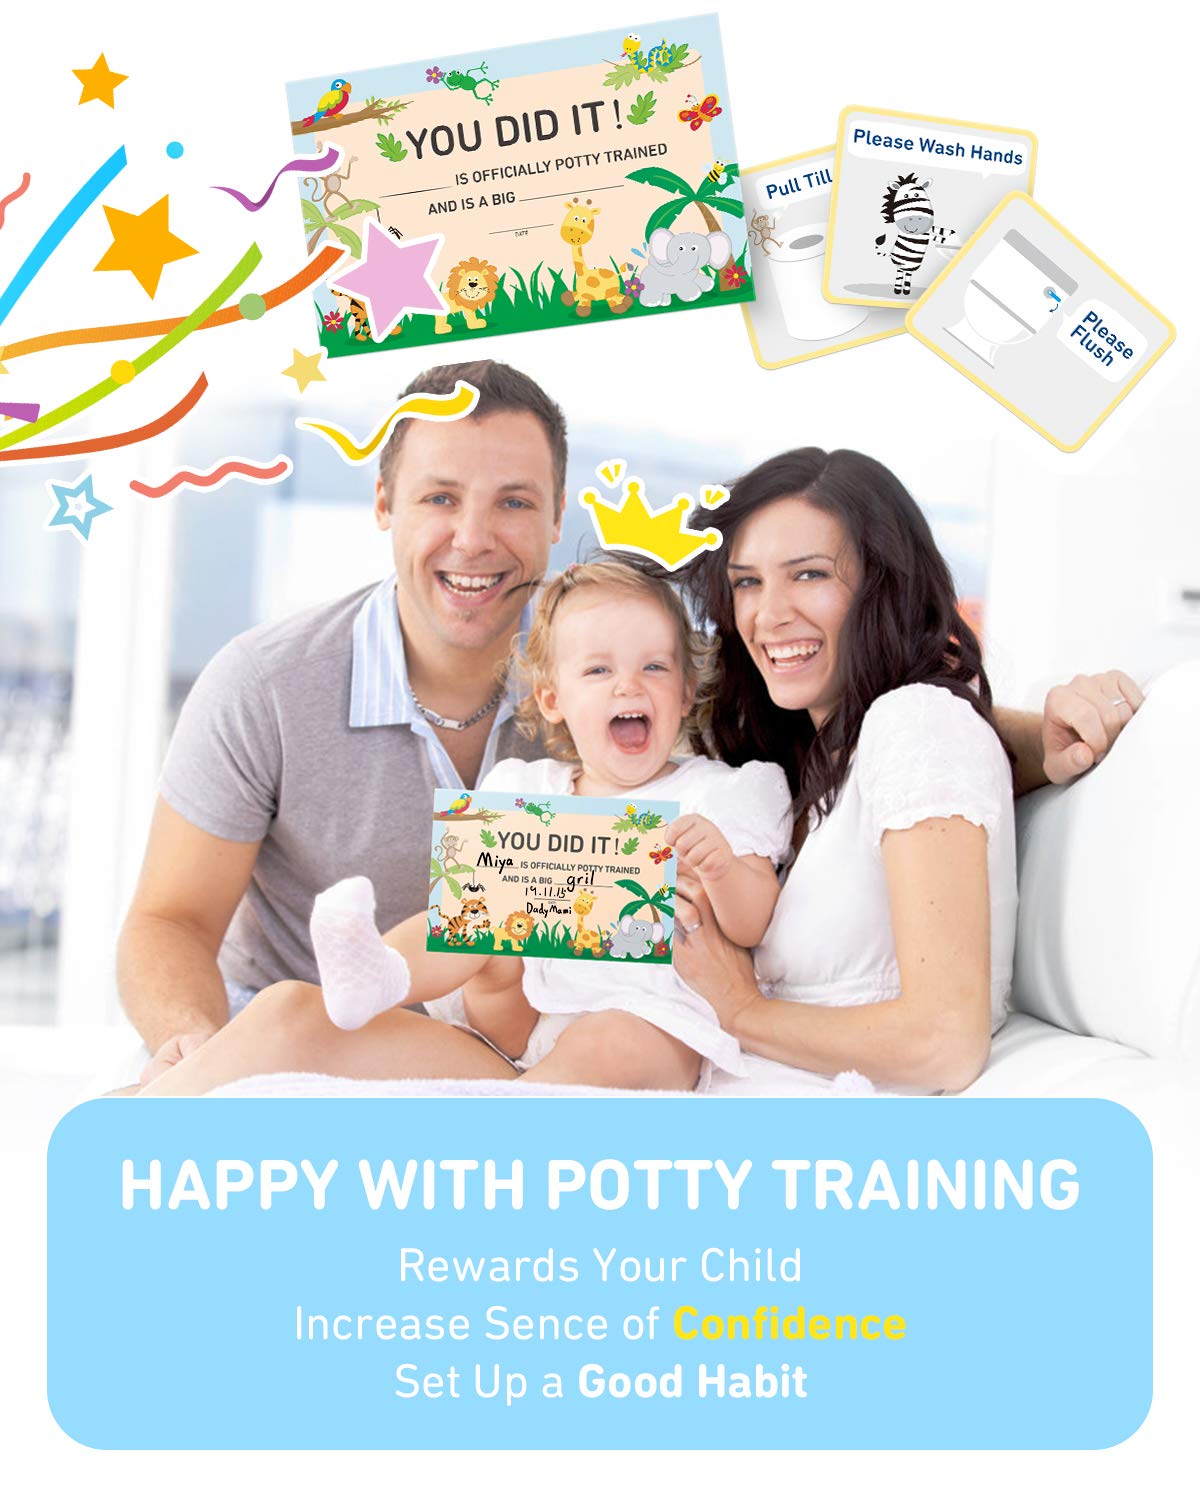 Babebay Potty Training Chart for Toddlers - Fun Animal Design